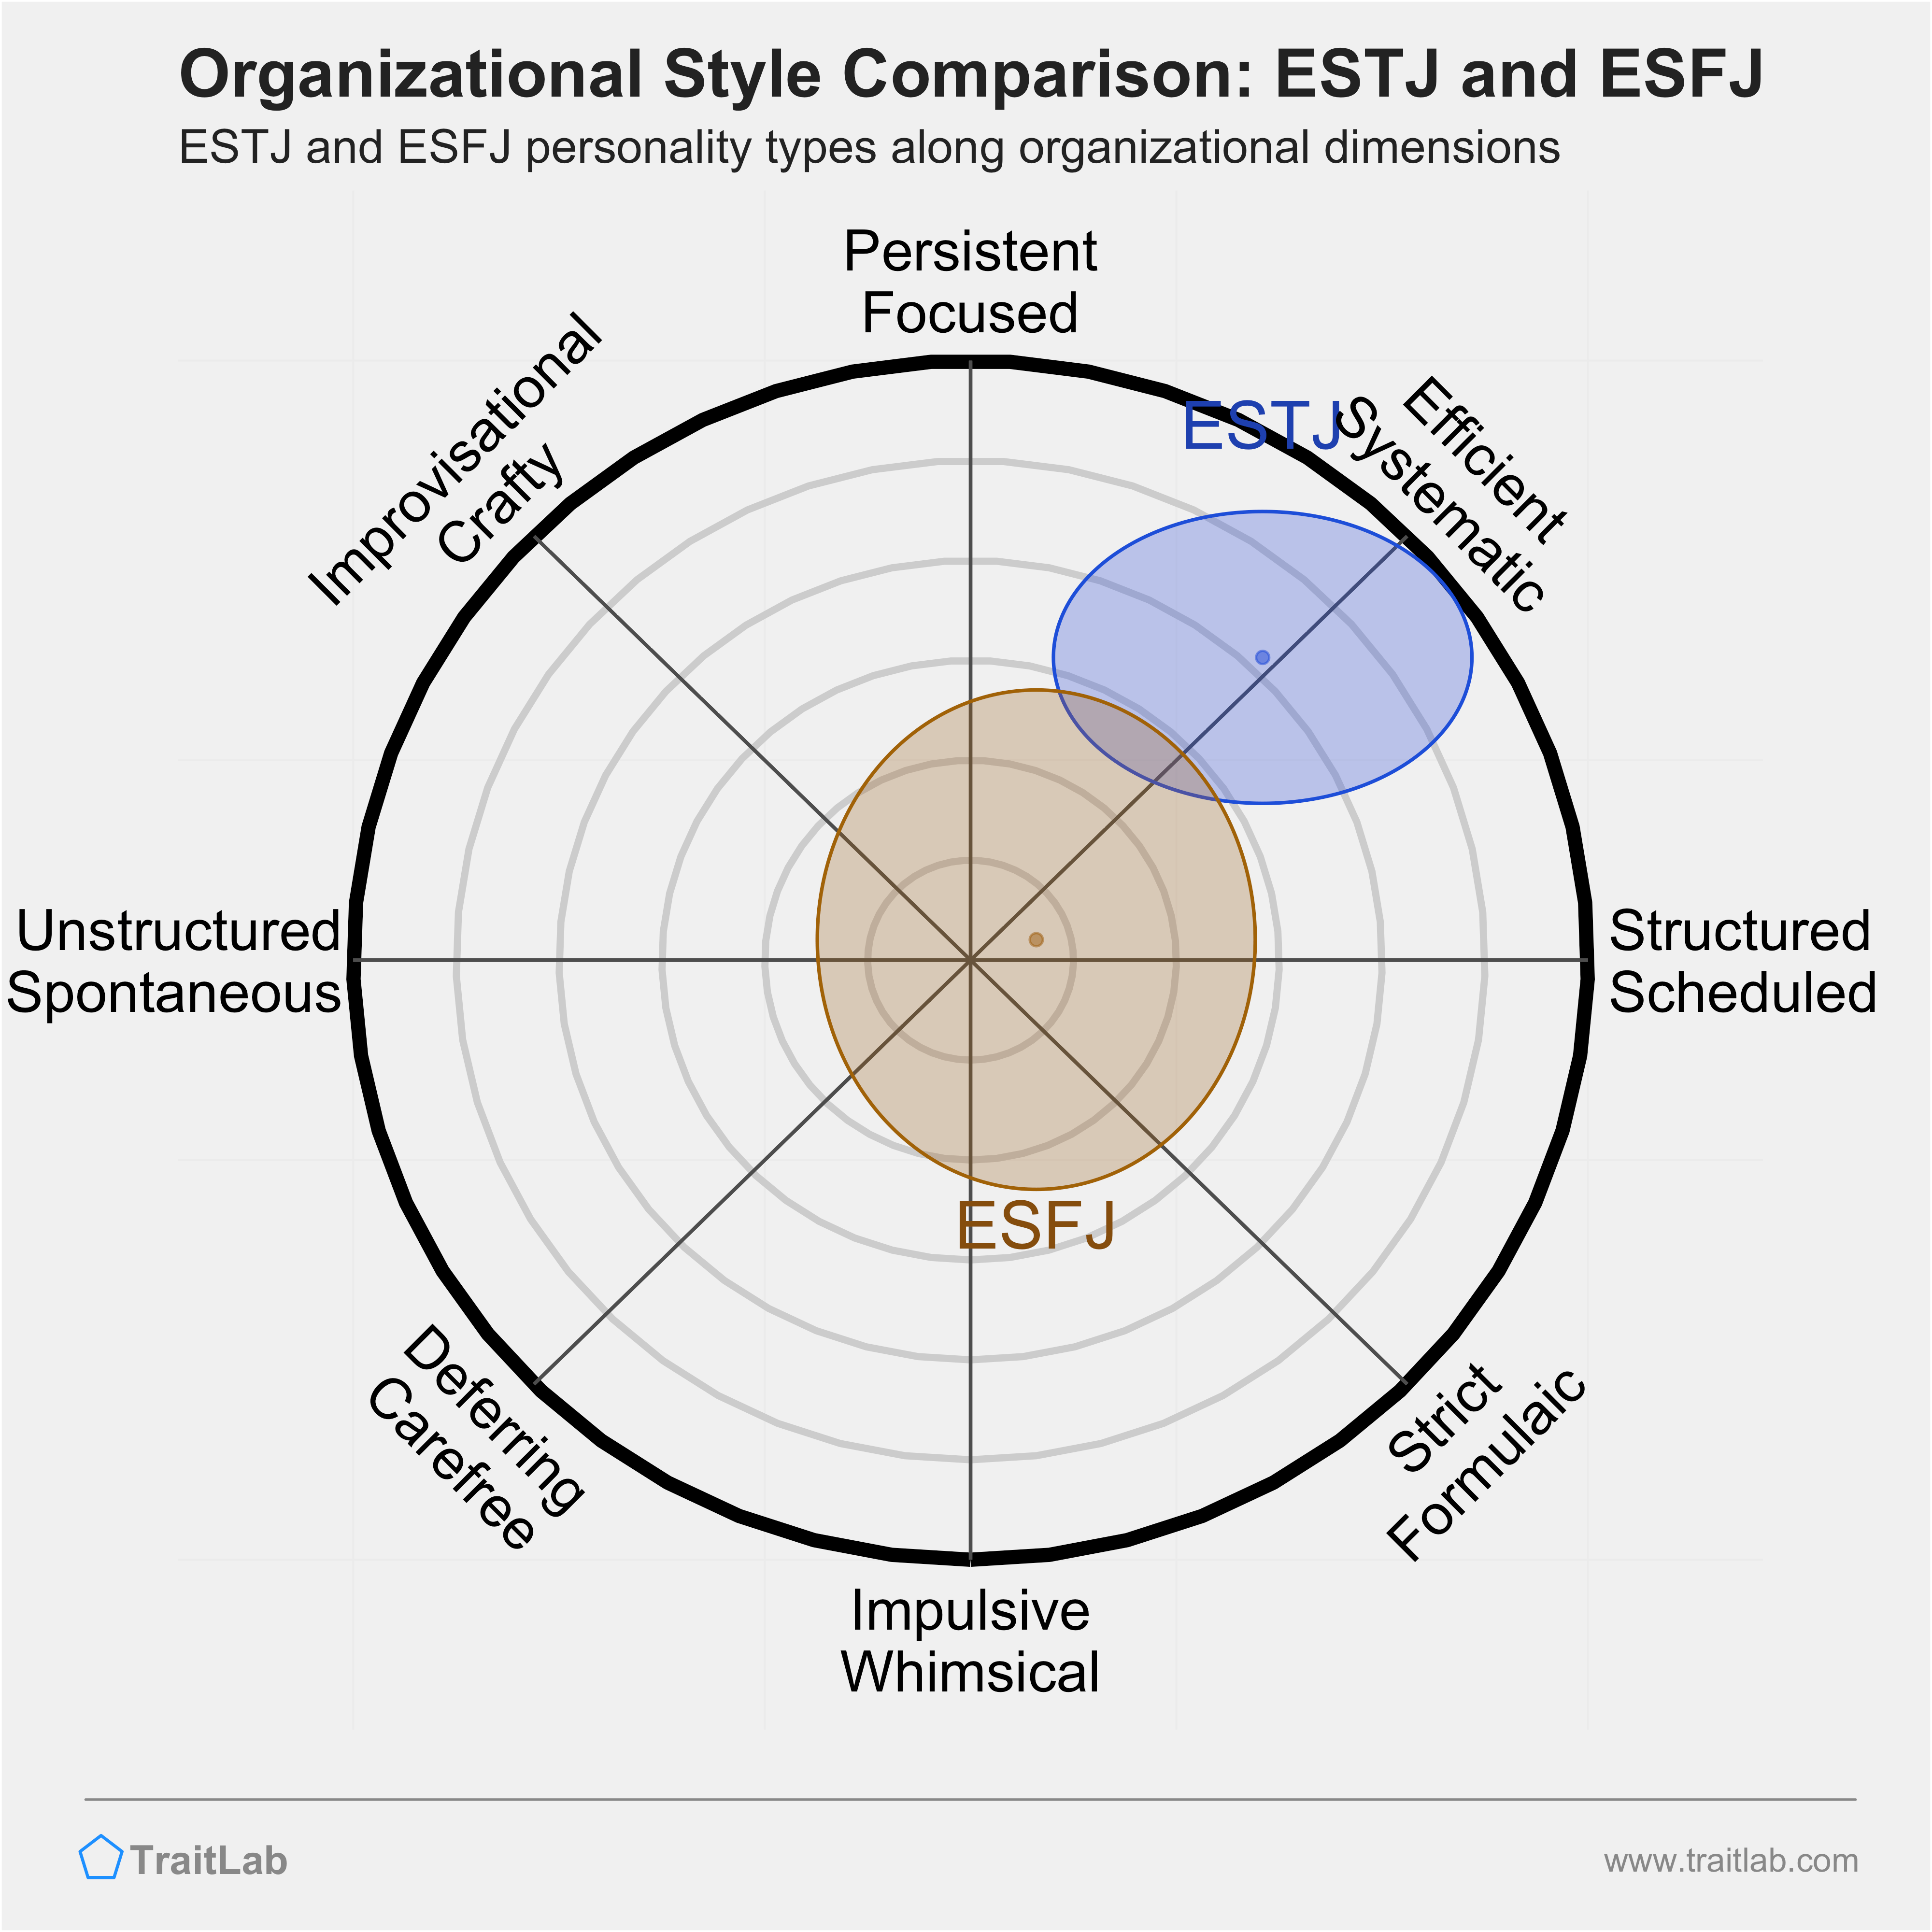 ESTJ and ESFJ comparison across organizational dimensions